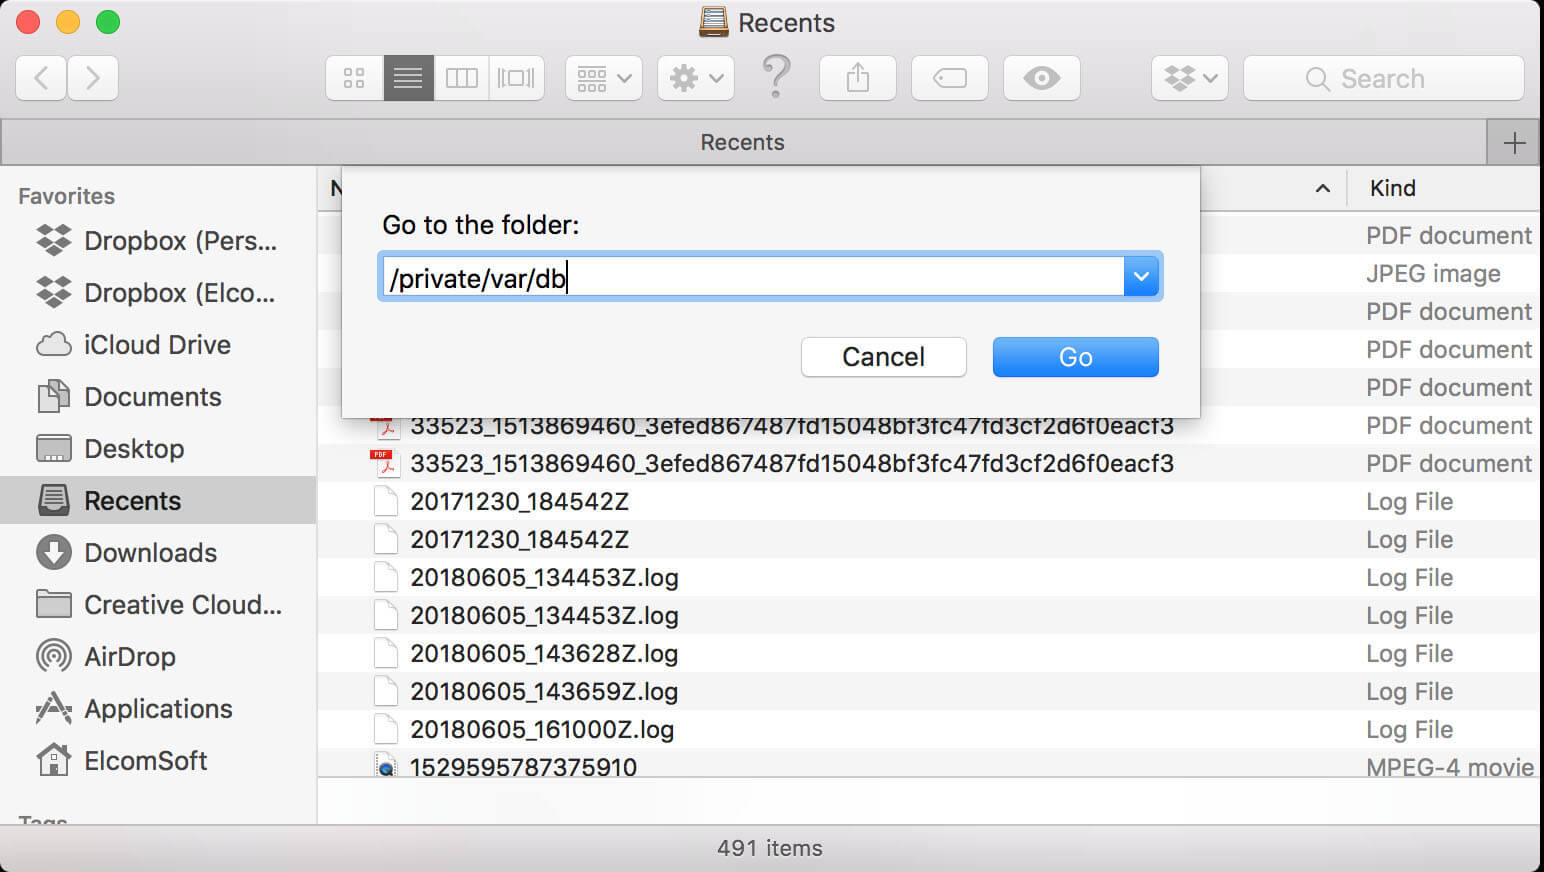 ExplorerPatcher 22621.2361.58.4 download the last version for apple